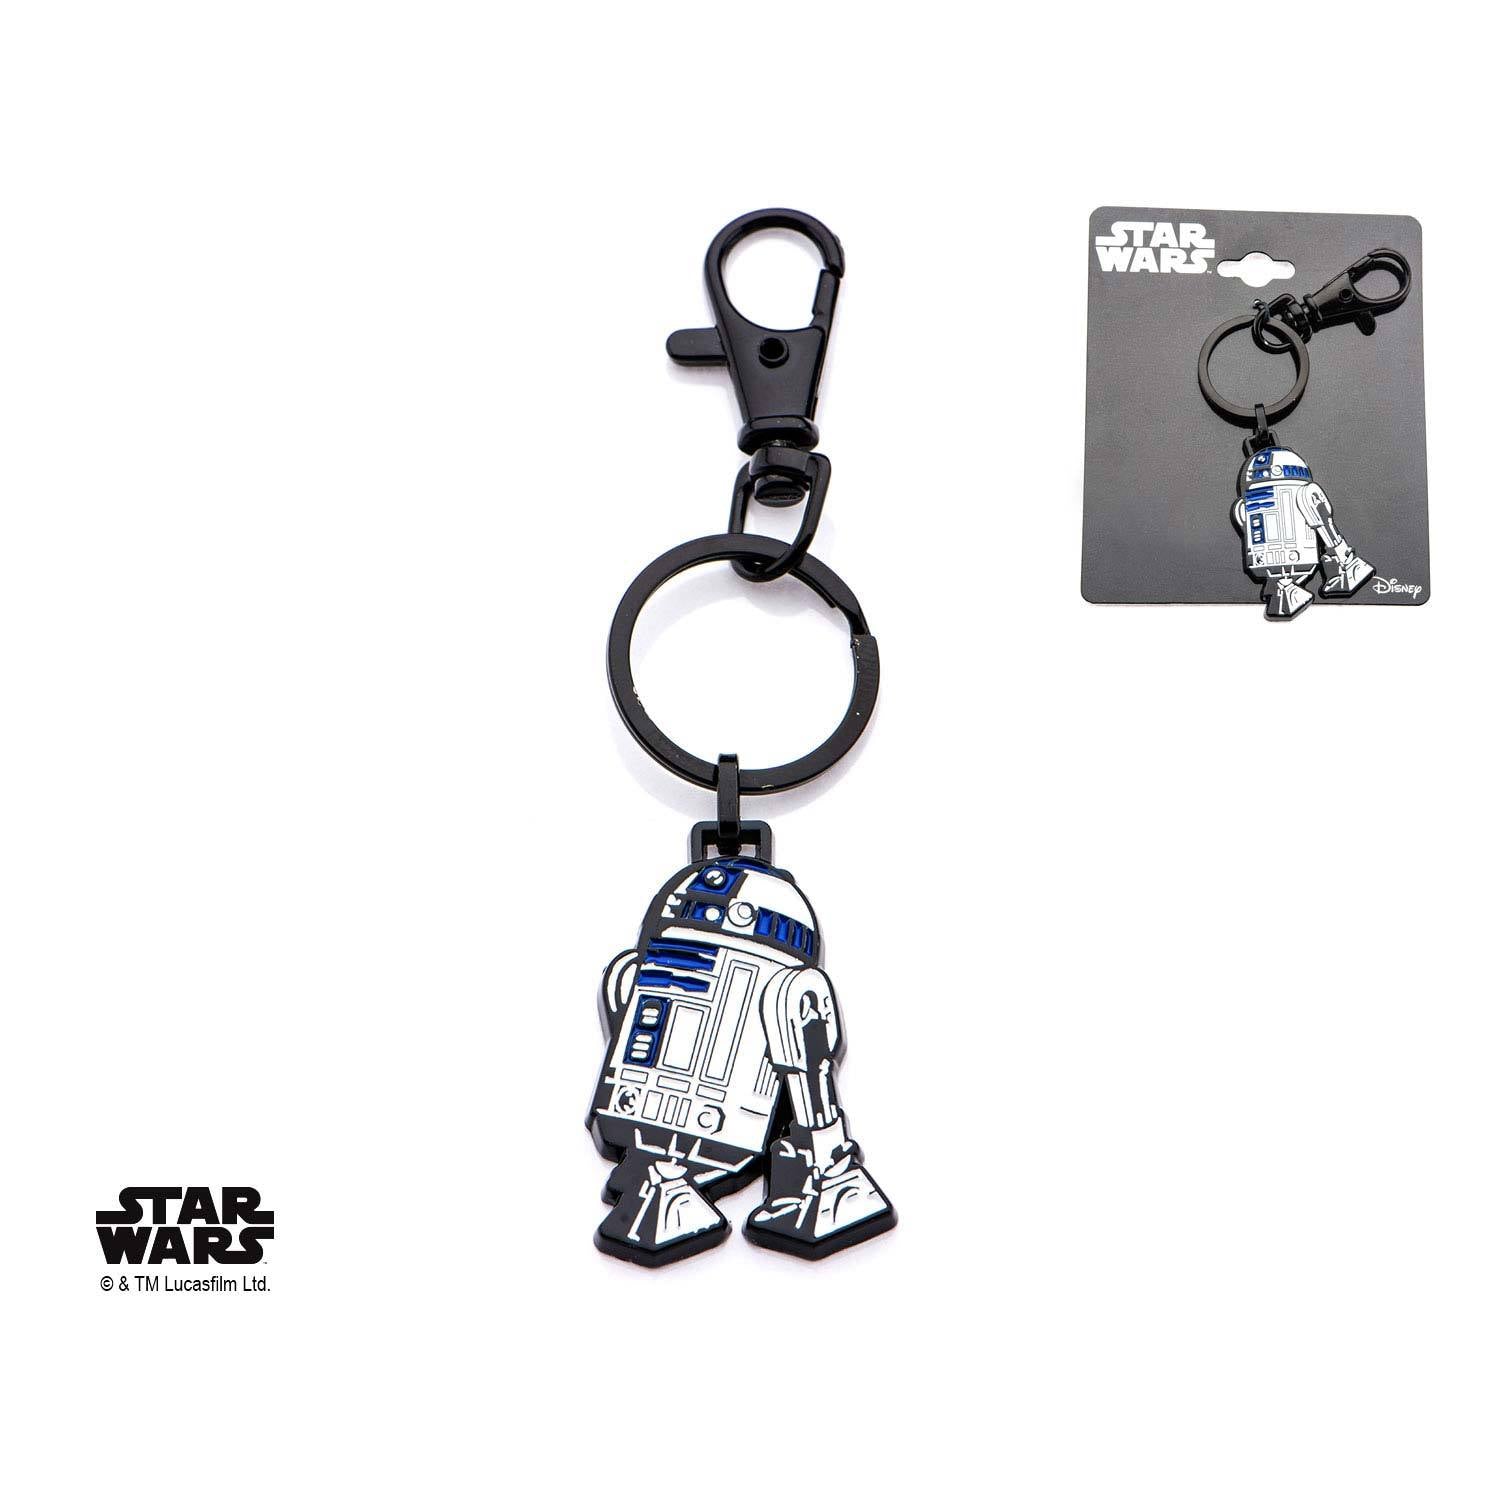 Star Wars 3D Han Solo Dice Keychain swhsdicekc01